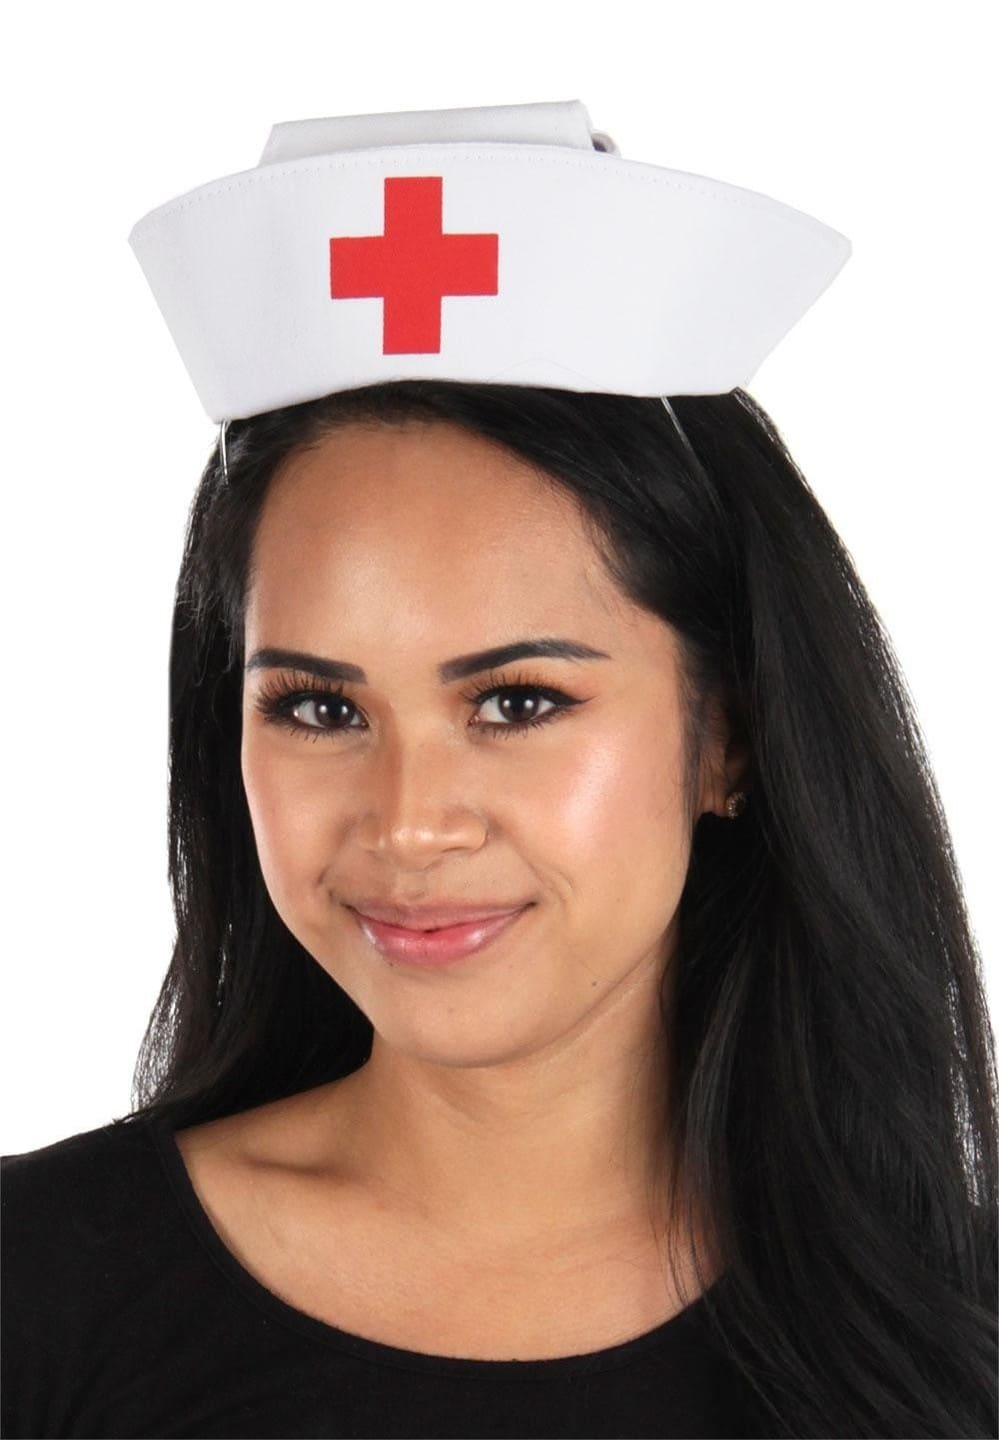 Nurse Hat 6